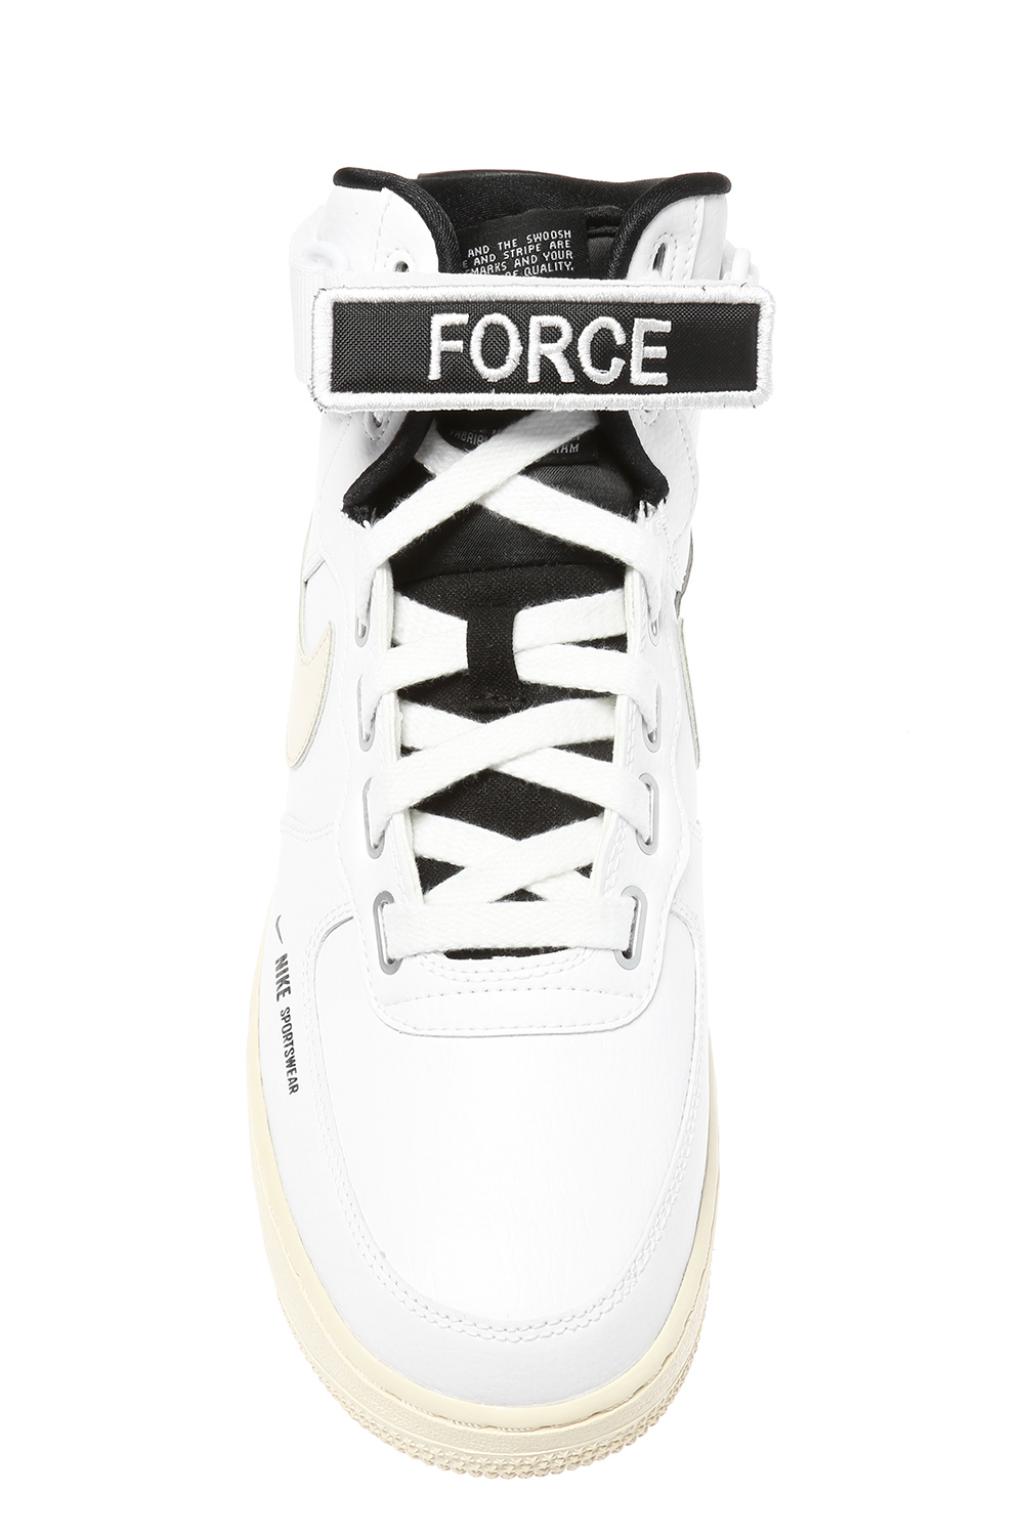 Nike Air Force 1 High Utility White Light Cream (Women's) - AJ7311-100 - US